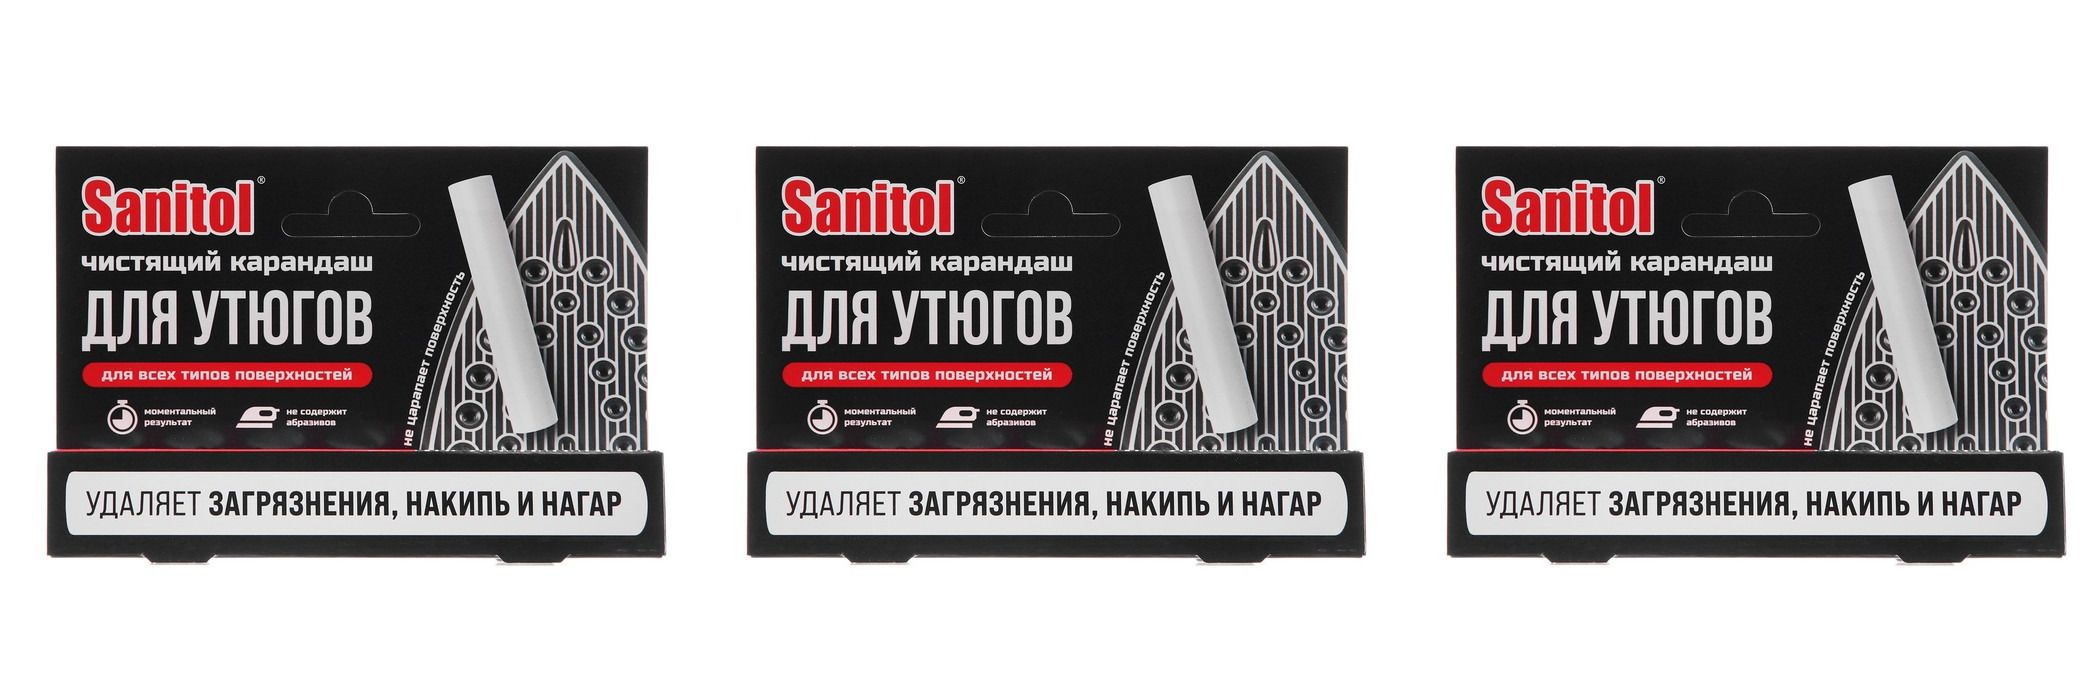 Чистящий карандаш для утюгов Sanitol 3шт чистящий карандаш для утюгов sanitol